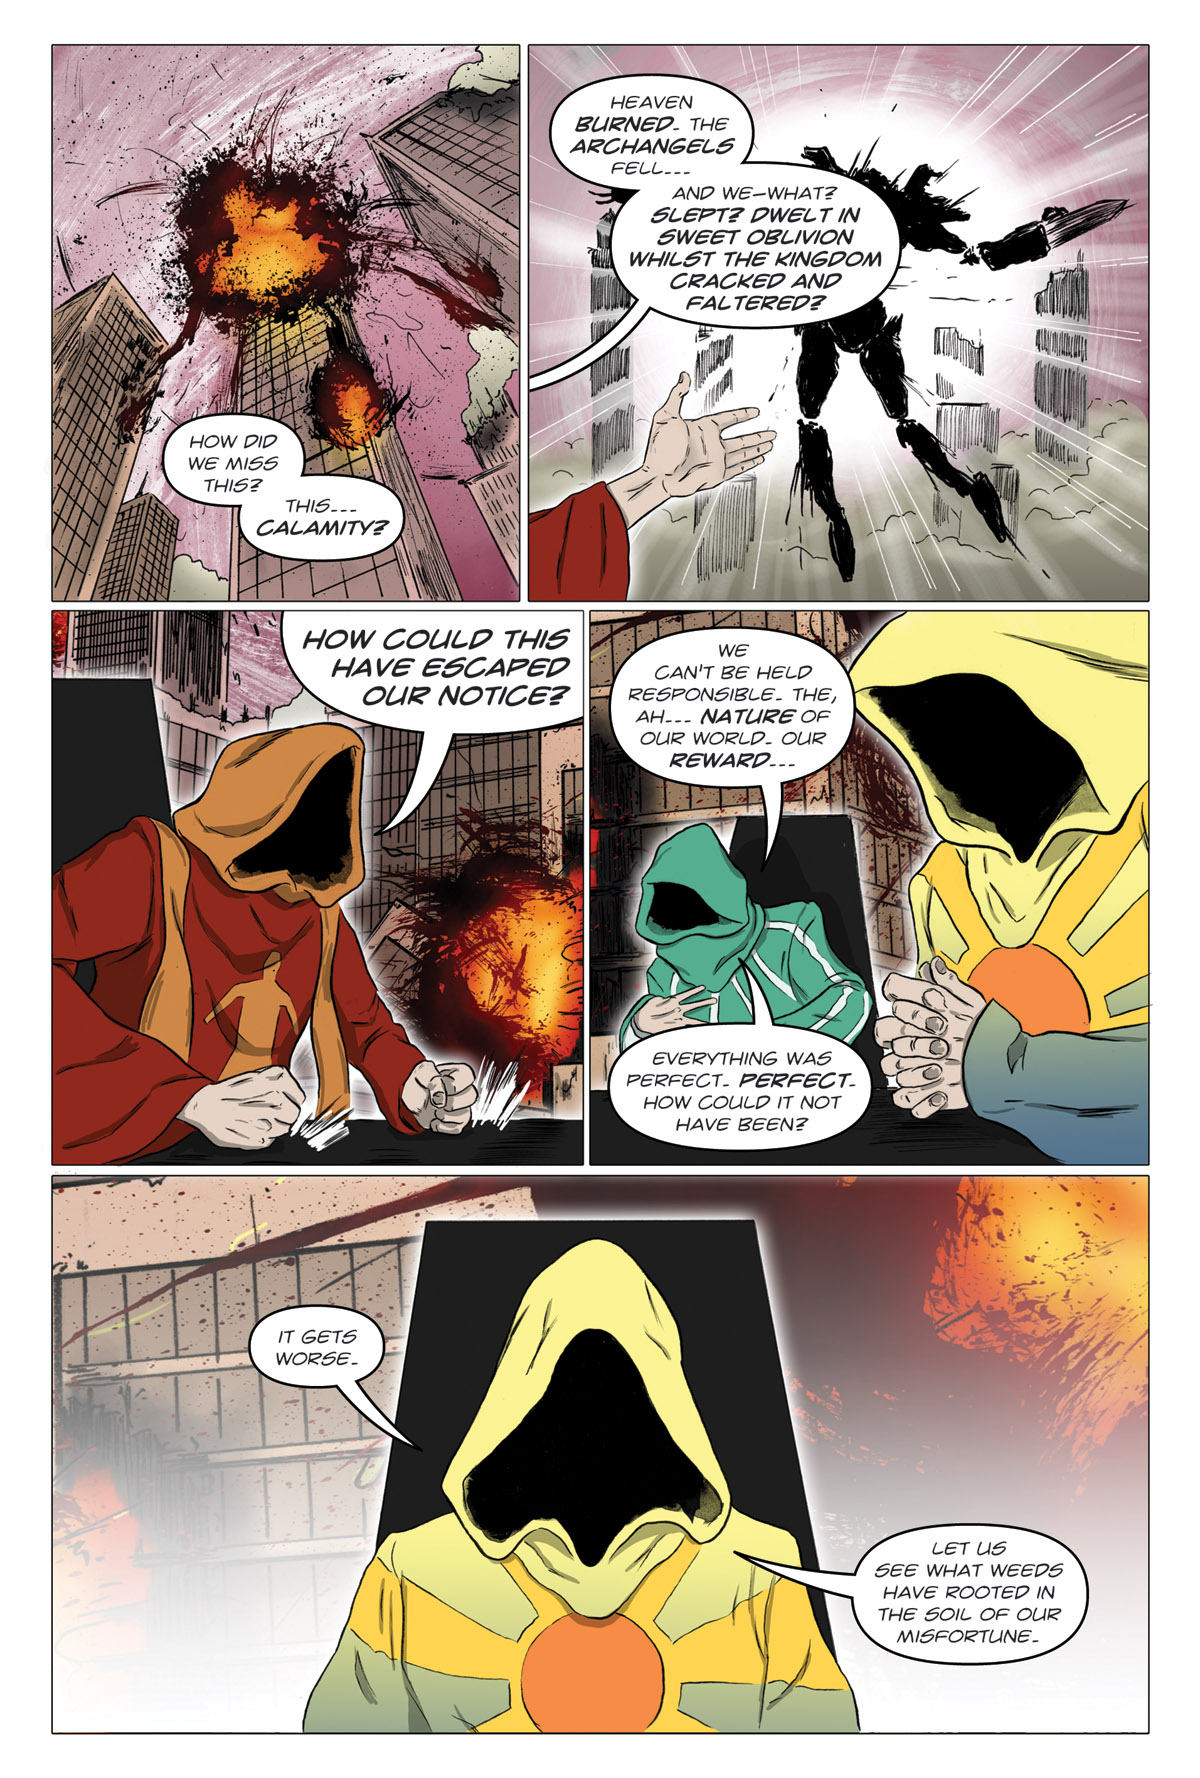 Afterlife Inc. | Genesis | Page 2